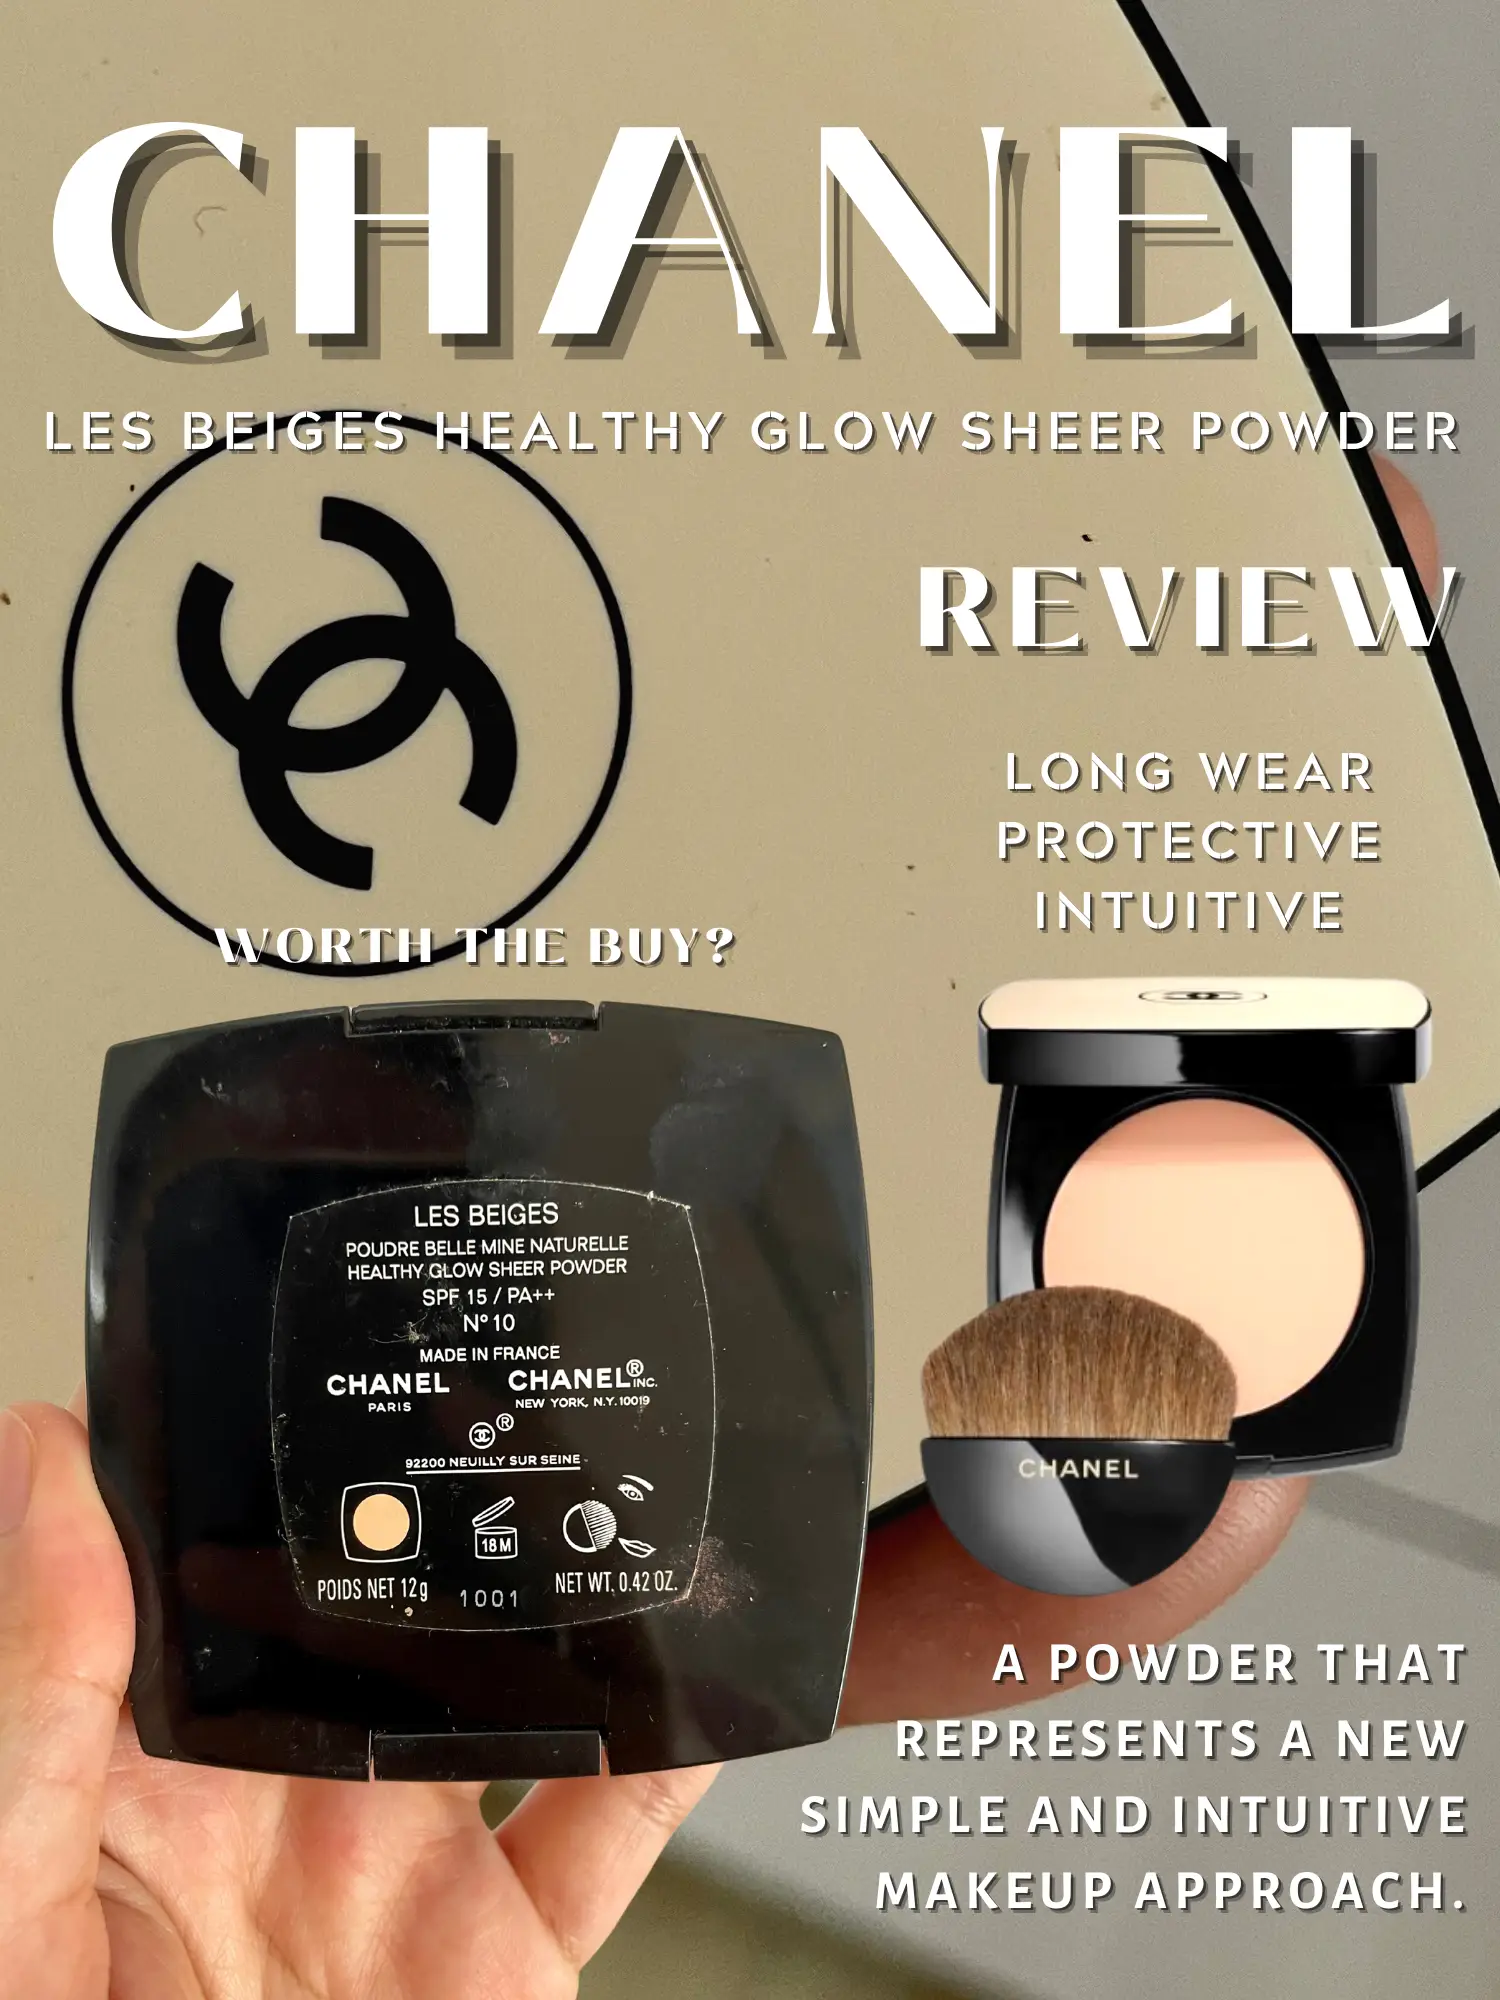 Chanel Les Beiges Healthy Glow Sheer Powder No 30 12g / 0.42 oz in